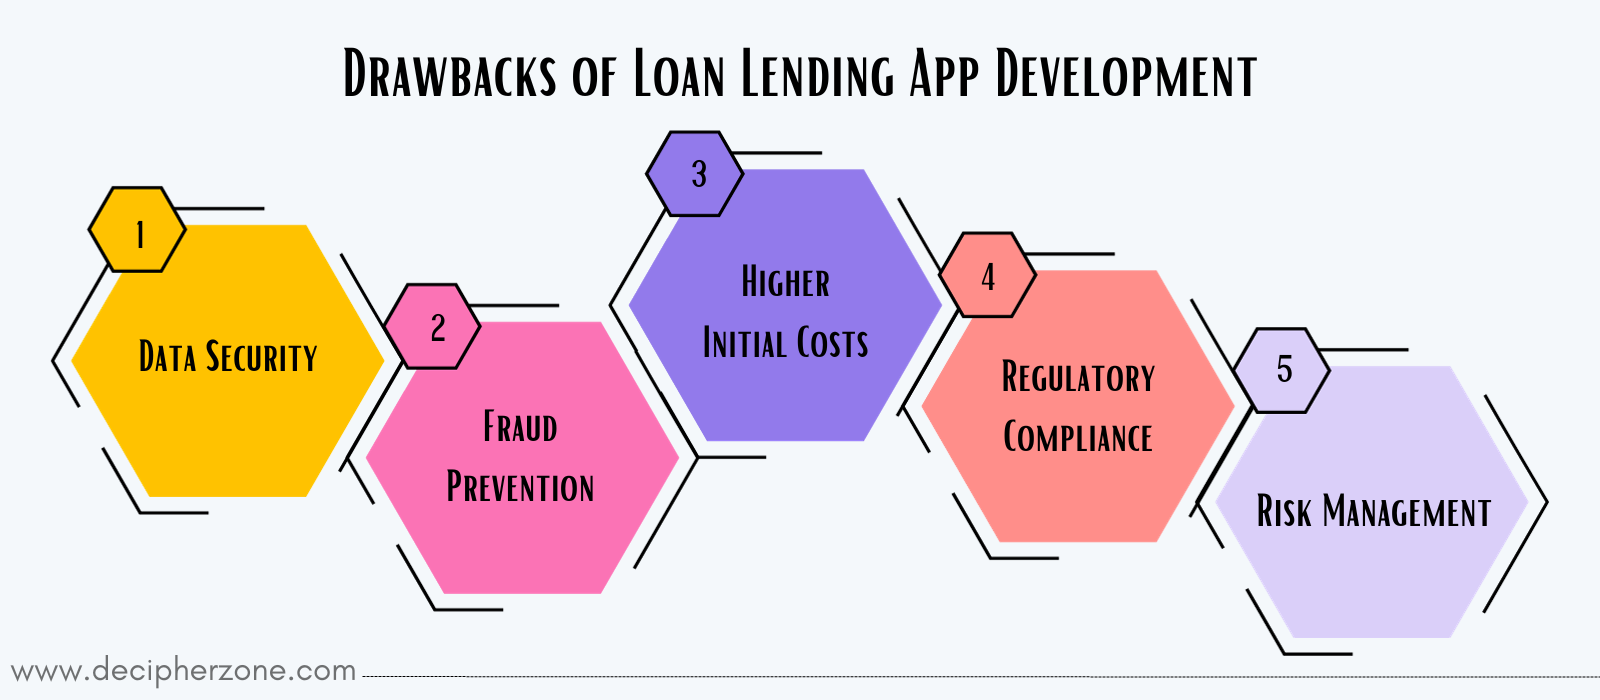 The cons of loan lending app development